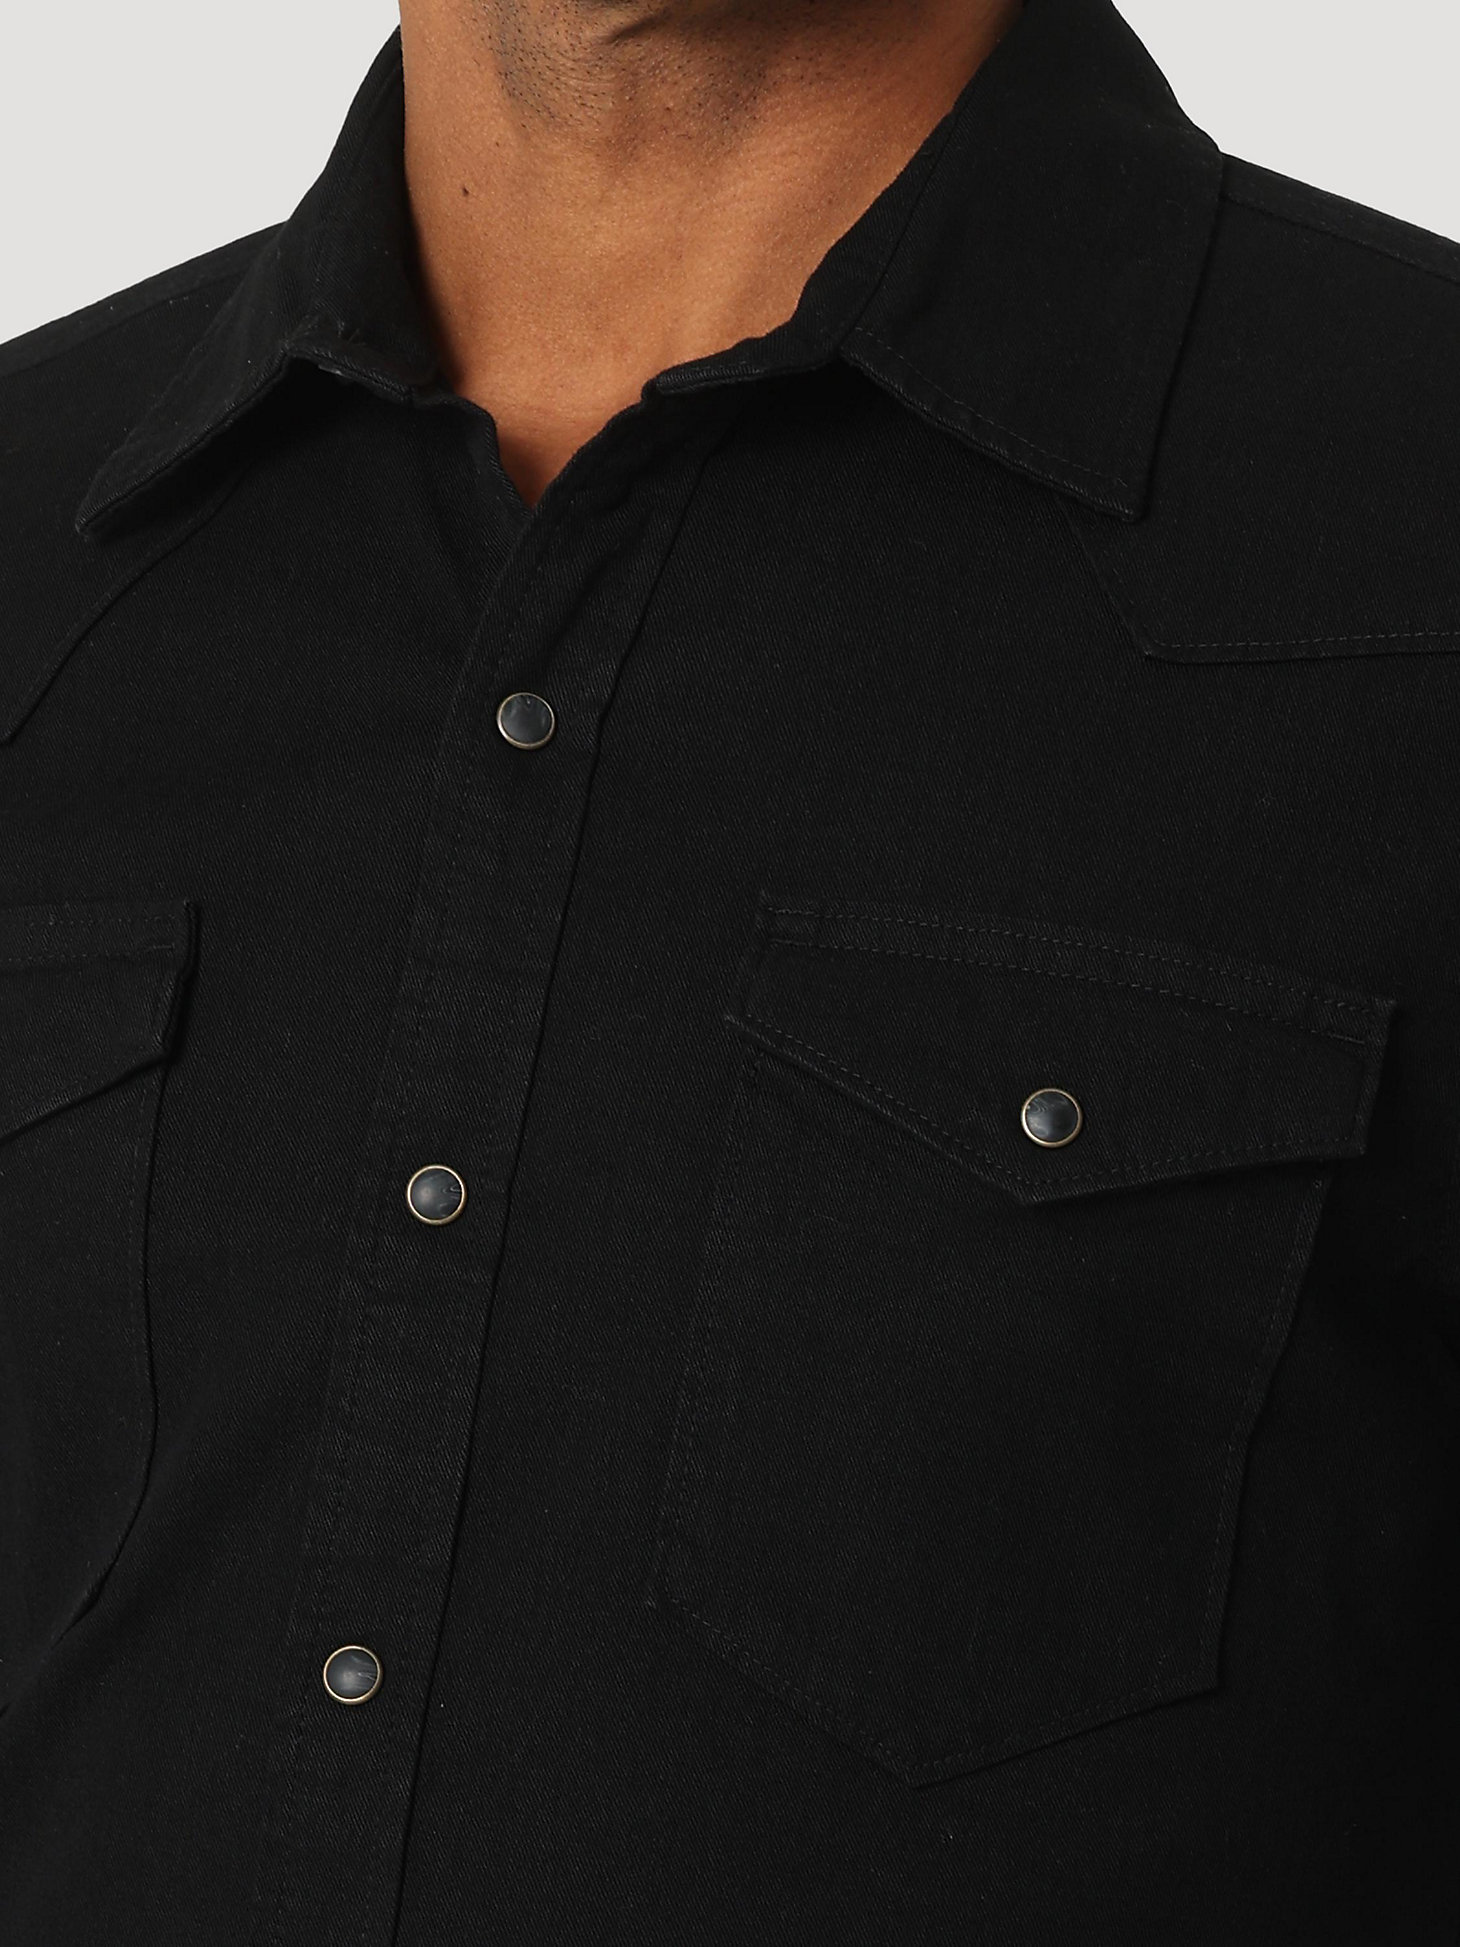 Men's Comfort Flex Denim Shirt in Black alternative view 2